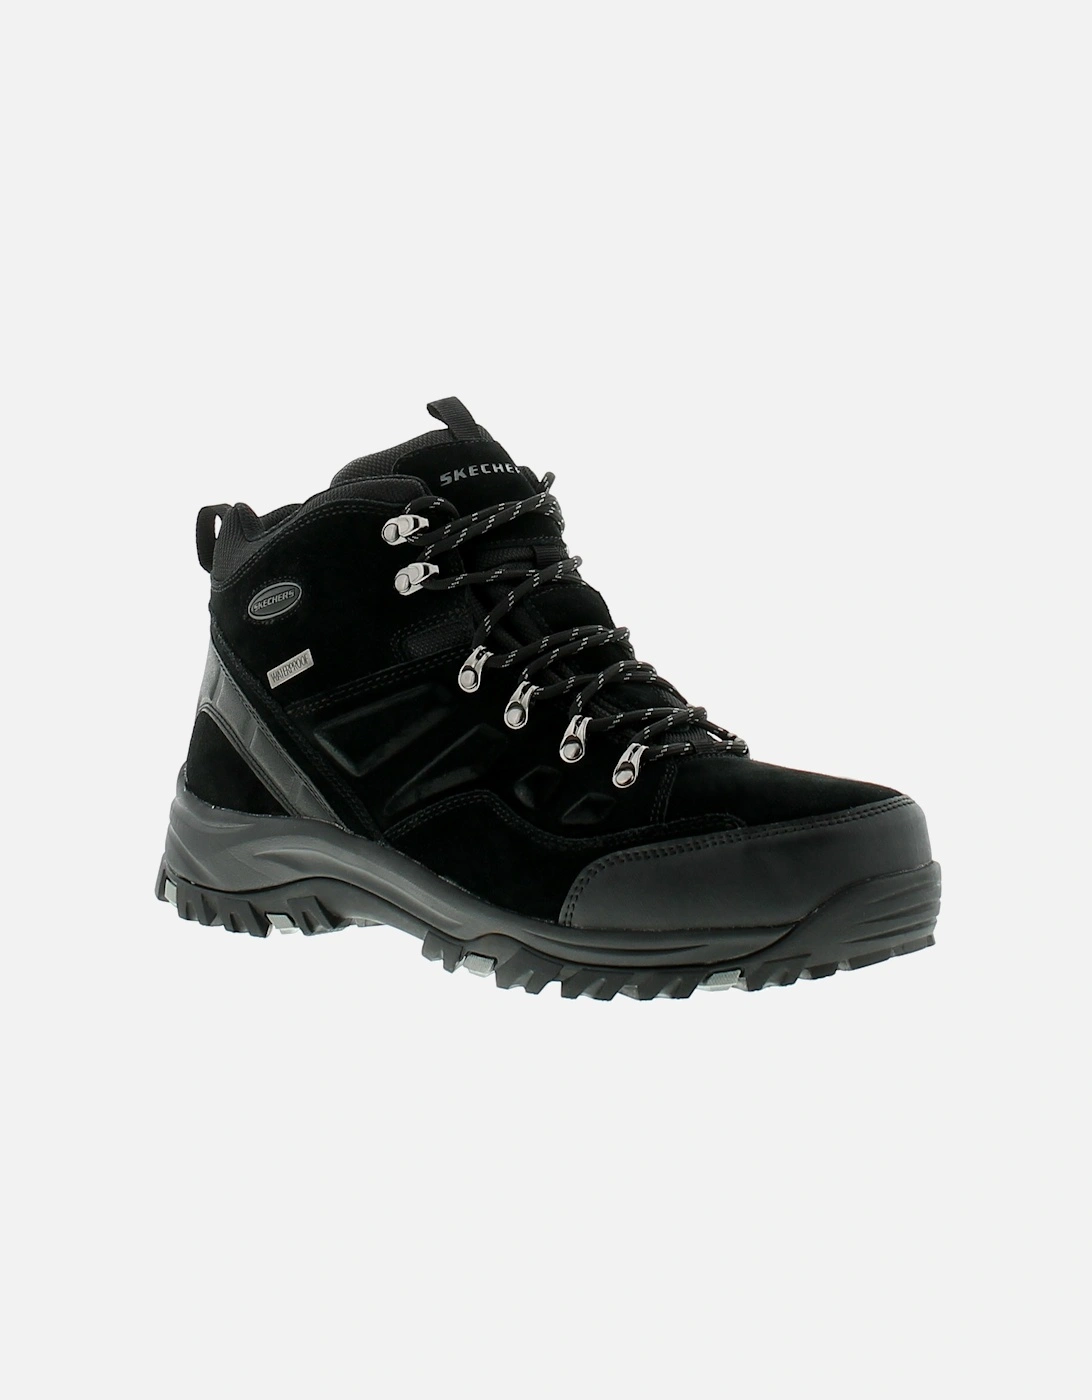 Mens Walking Boots Relment Pelmo Lace Up black UK Size, 6 of 5